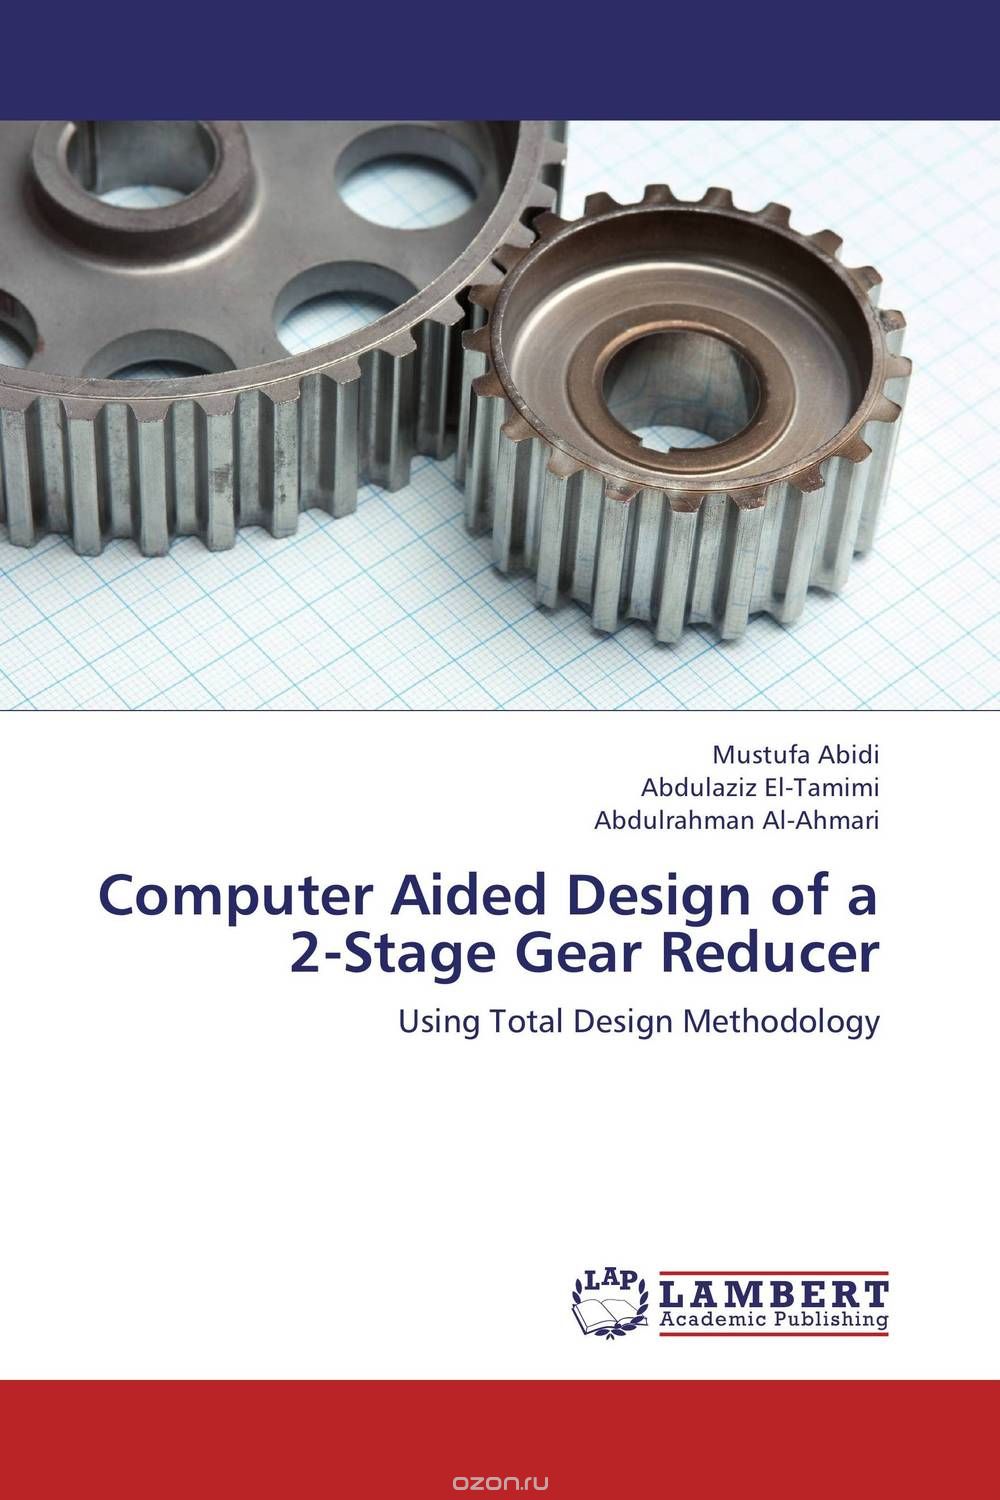 Скачать книгу "Computer Aided Design of a 2-Stage Gear Reducer"